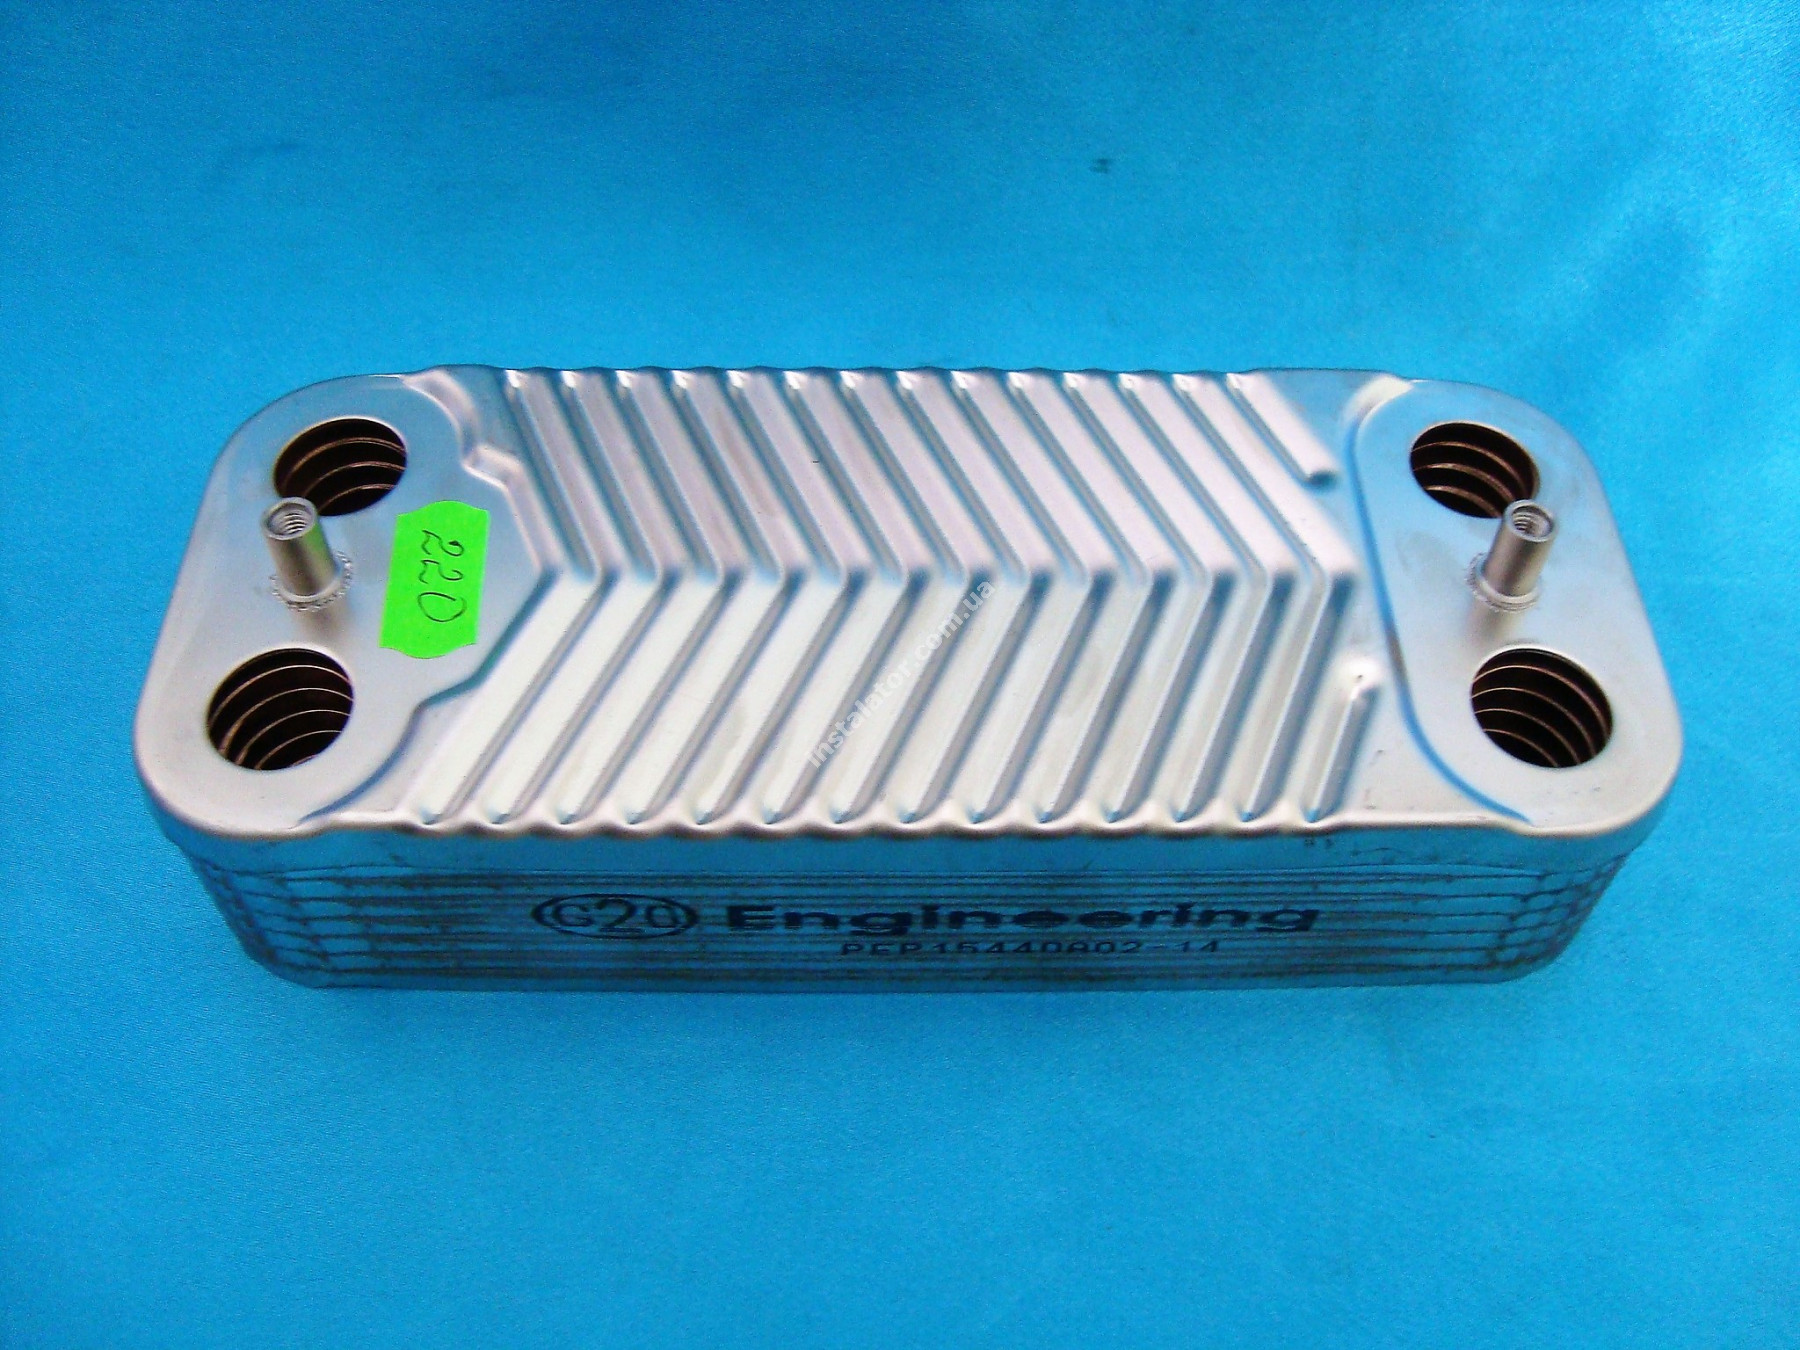  Теплообменник вторичный (пластинчастый 14 пластин) ГВП Immergas (220-аналог) full-image-0